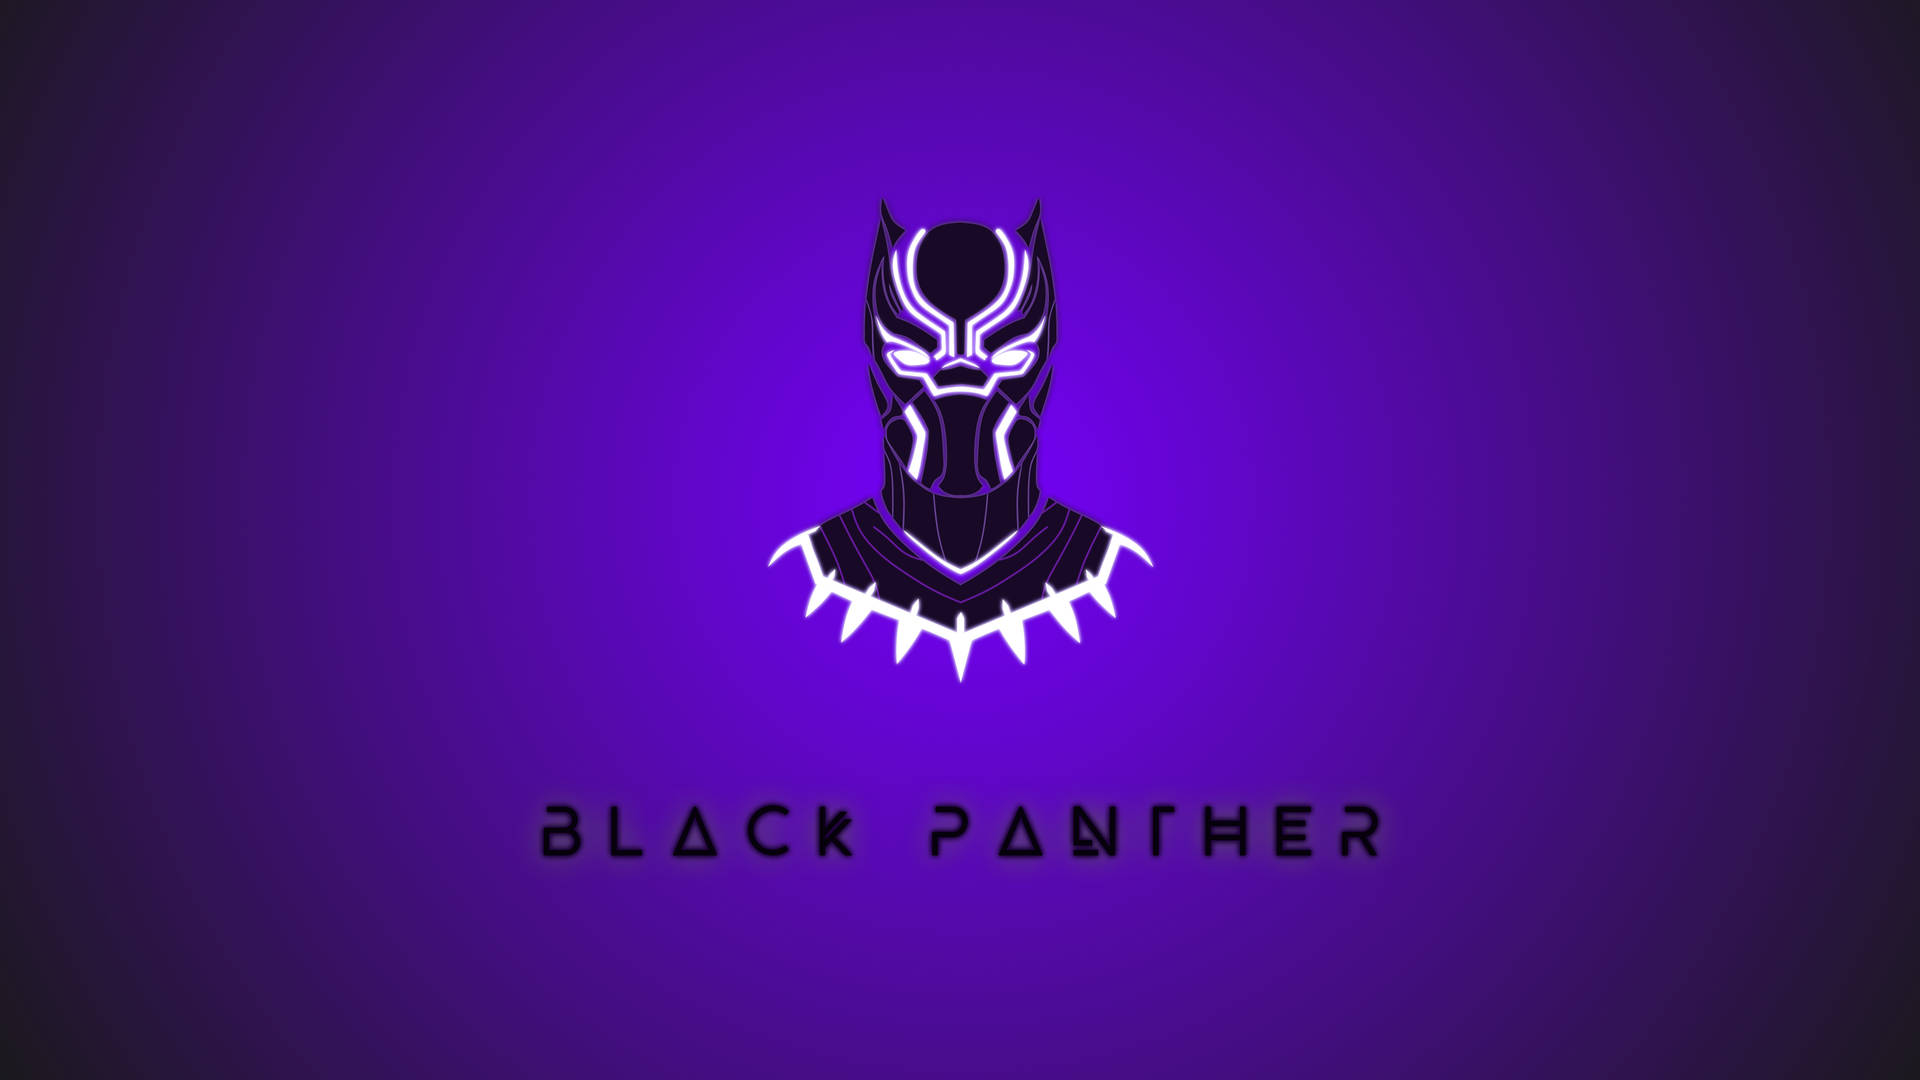 Black Panther 4k Ultra Hd Dark Graphic Art